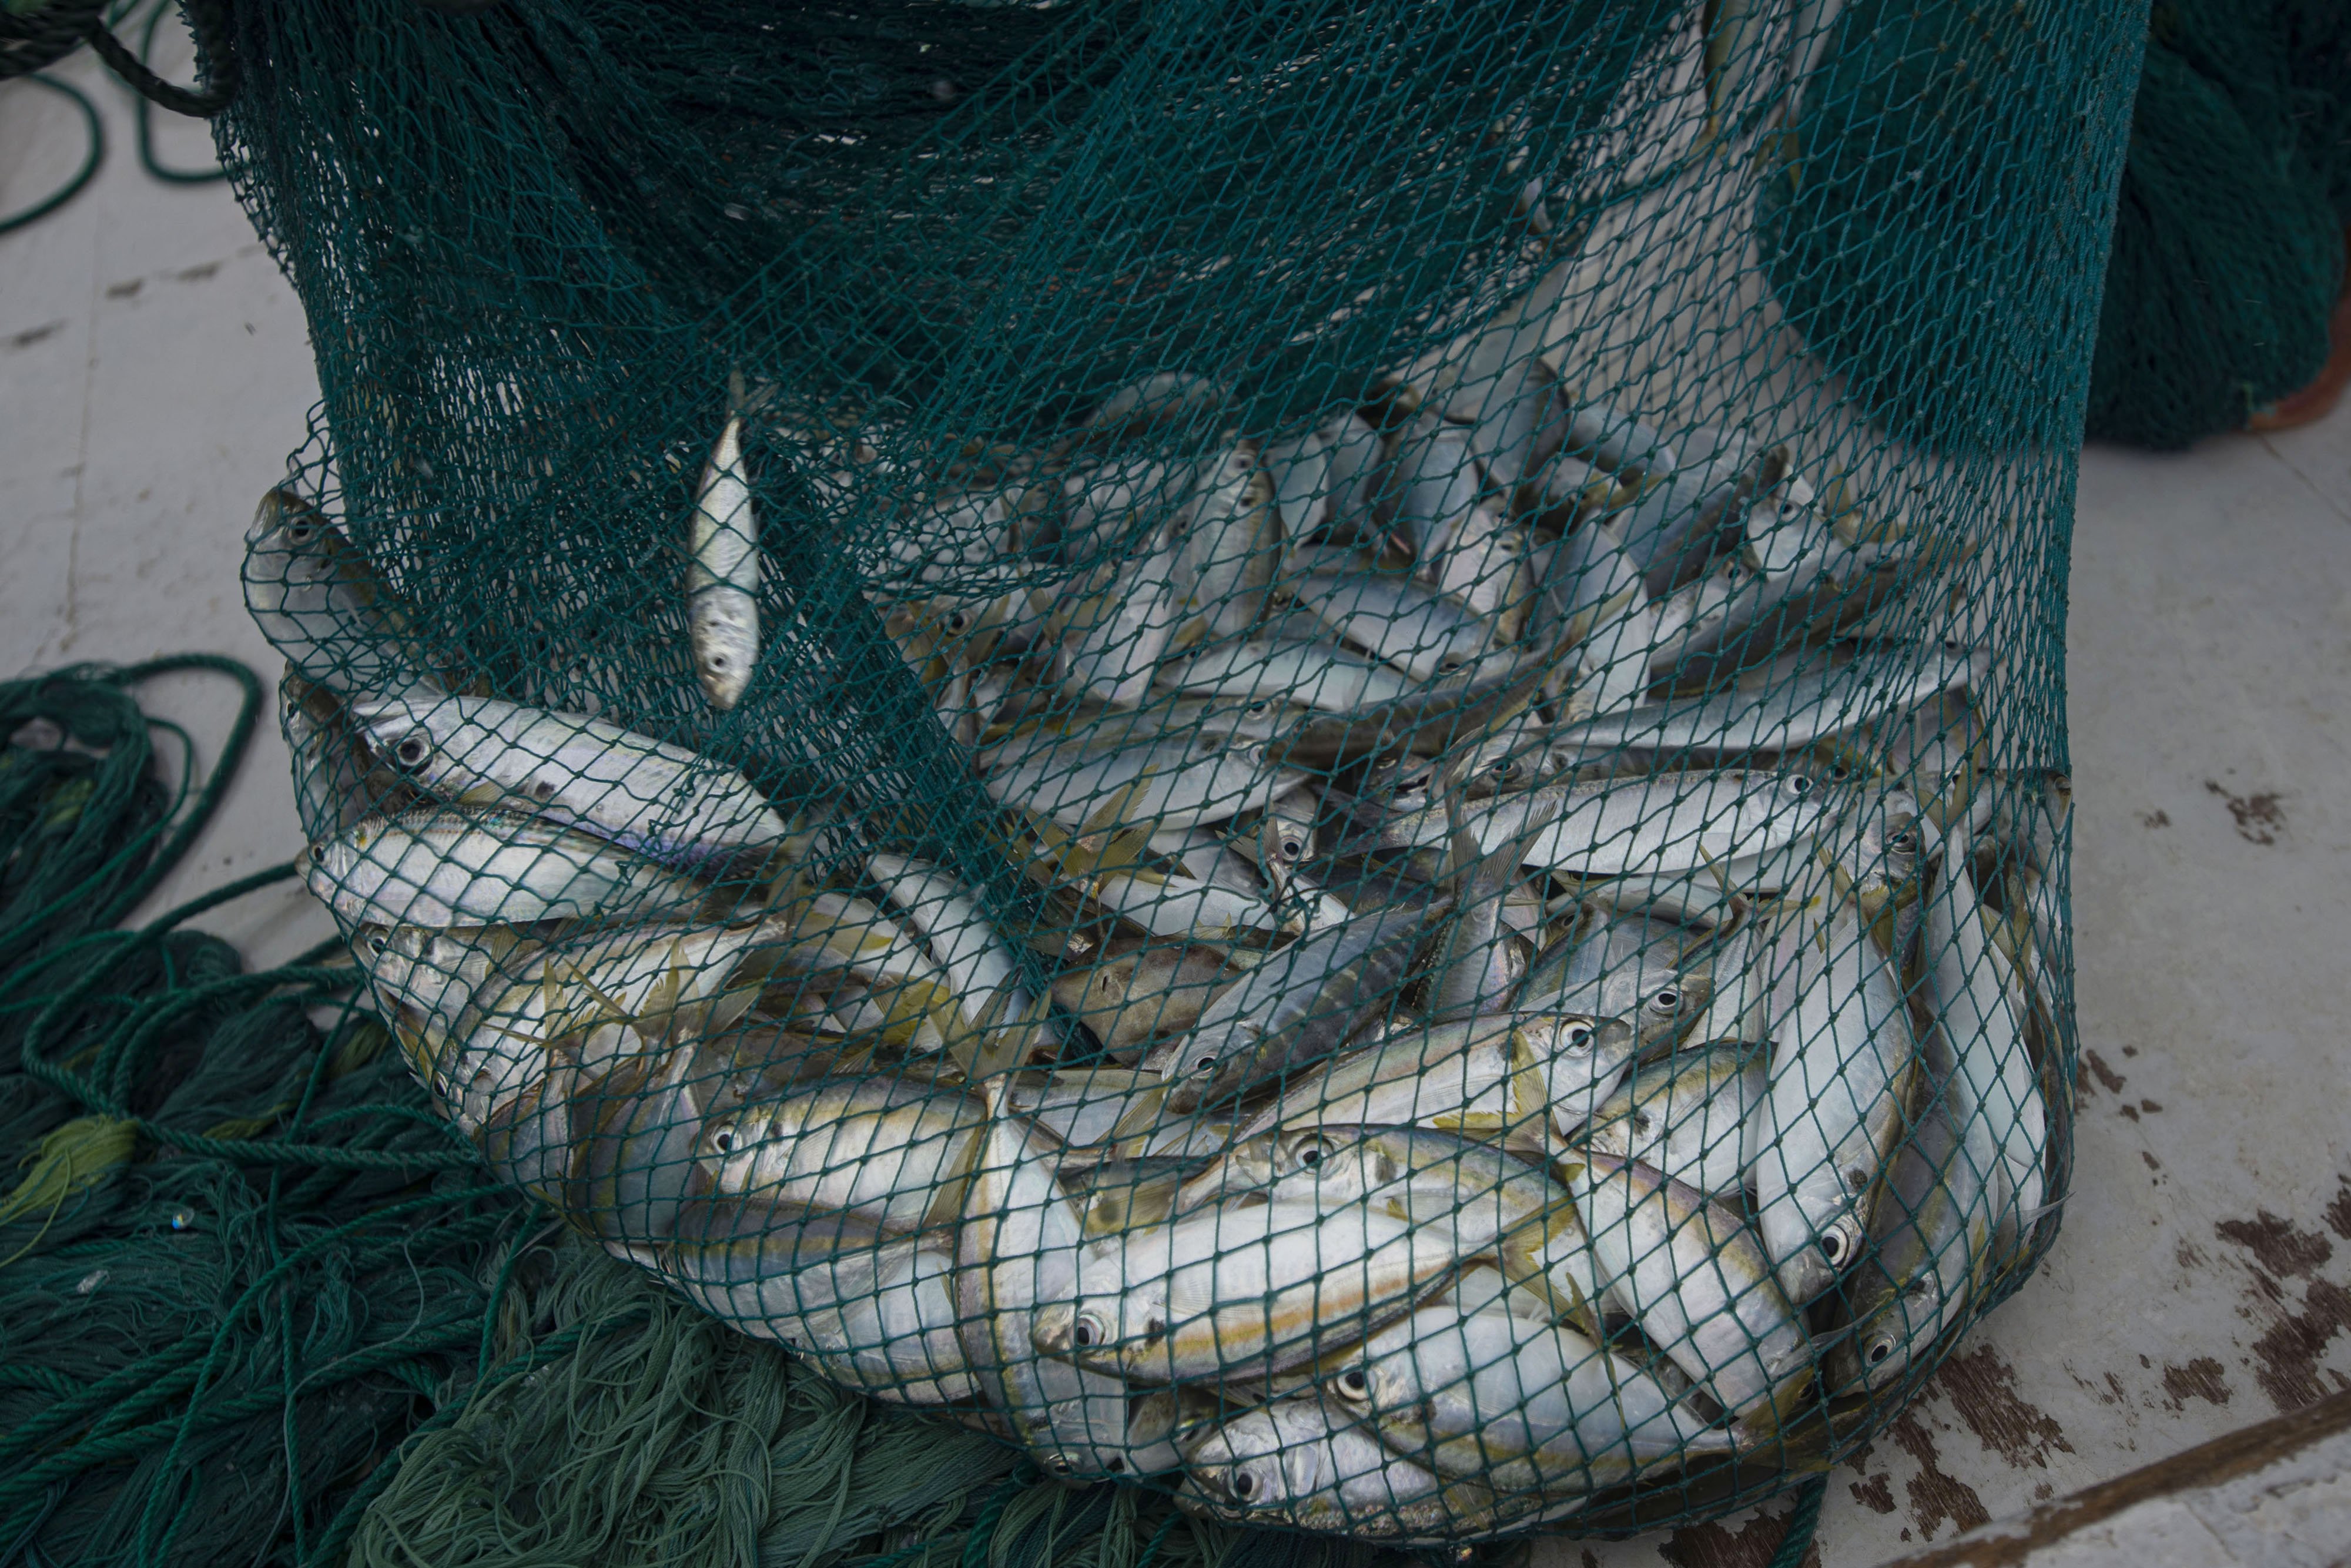 Hasil tangkapan ikan dari wilayah perairan di laut dekat Pulau Sabira, sebuah pulau paling utara yang berada di Kepulauan Seribu, Provinsi DKI Jakarta. Hari demi hari jumlah nelayan di Sabira terus berkurang, Sebelum tahun 2000-an dermaga dipenuhi 55 kapal nelayan, tetapi kini jumlahnya tak lebih dari 15